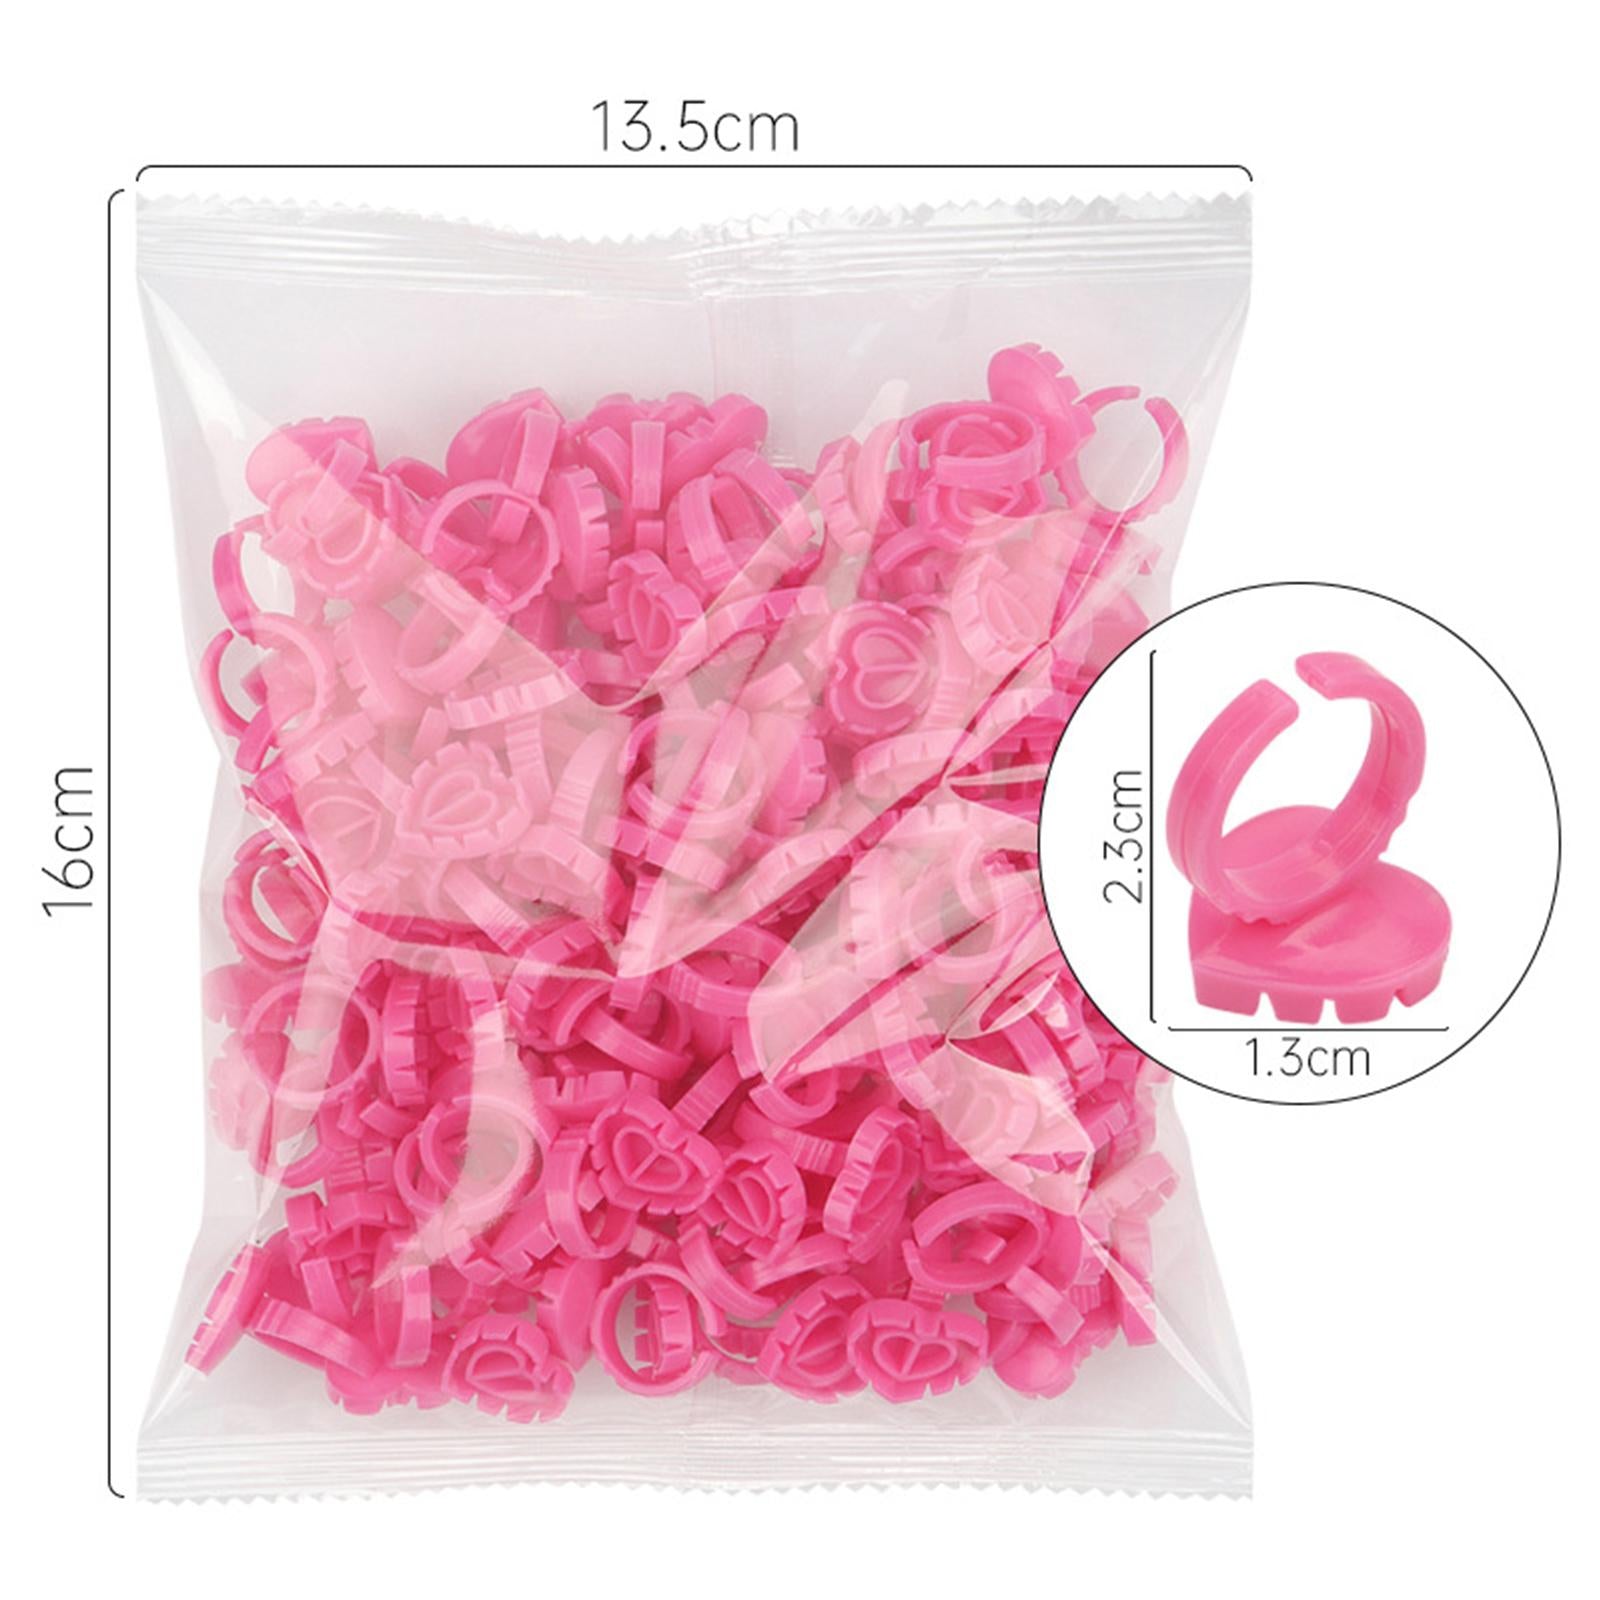 100 Pieces Disposable Glue Rings Grafting Eyelashes for Salon Nail Art Pink